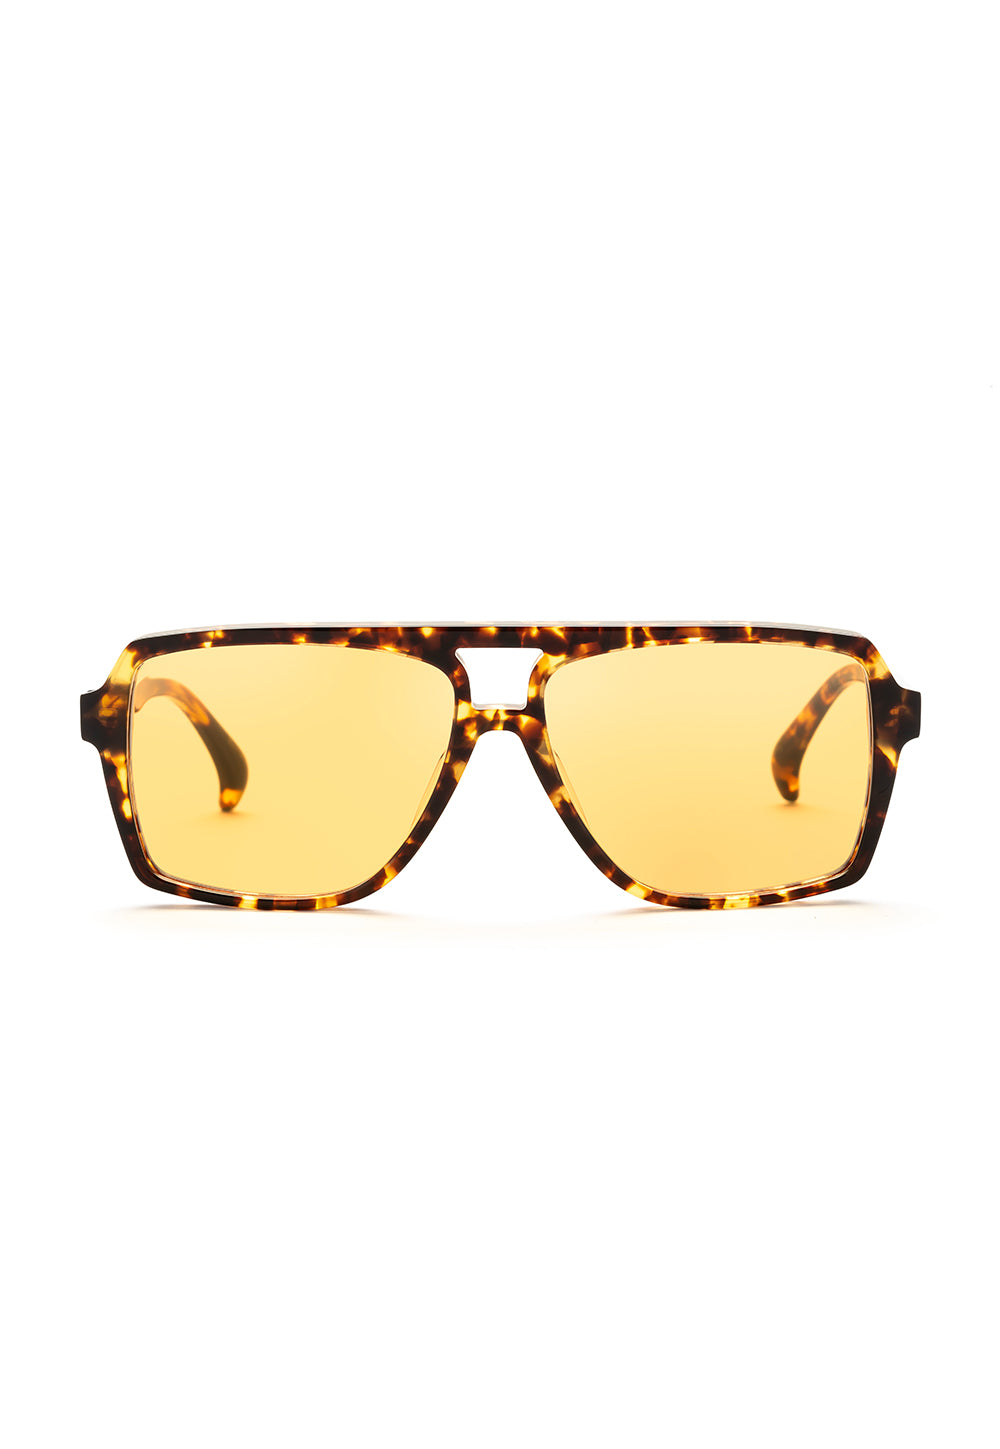 Cox Photo Chromic Sunglasses - Tort Amber sold by Angel Divine